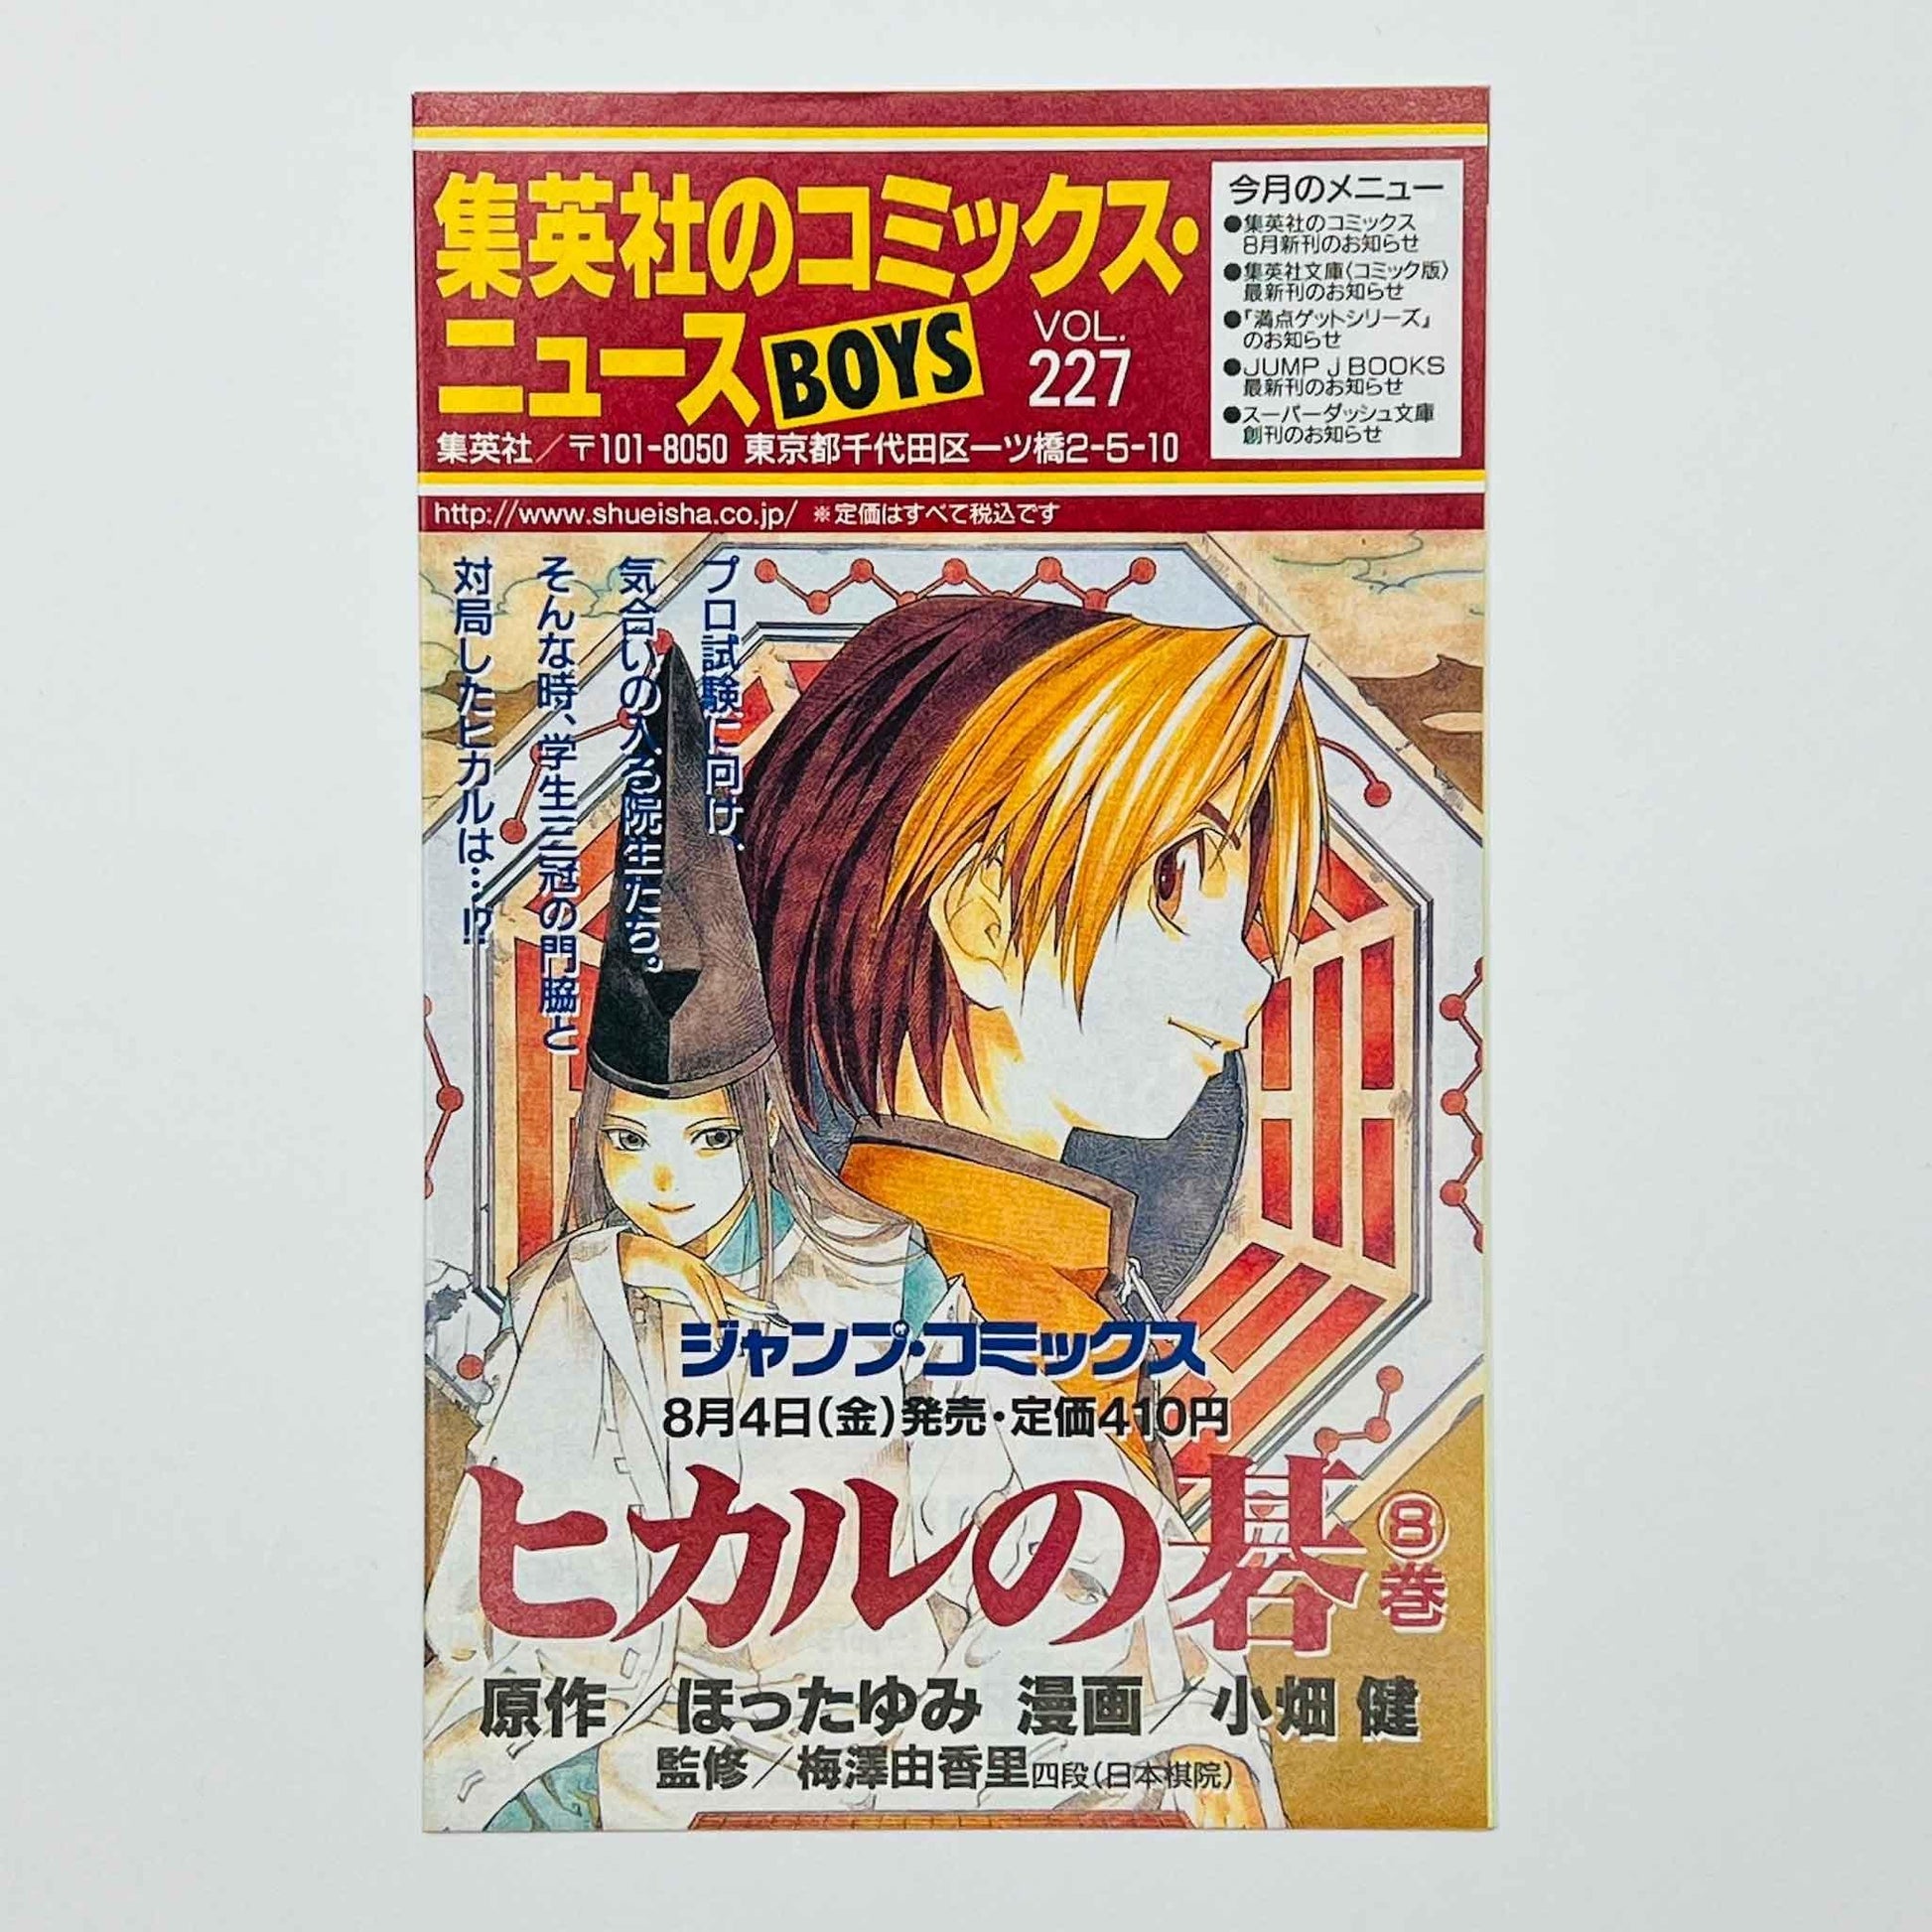 Naruto - Volume 03 - 1stPrint.net - 1st First Print Edition Manga Store - M-NARUTO-03-001